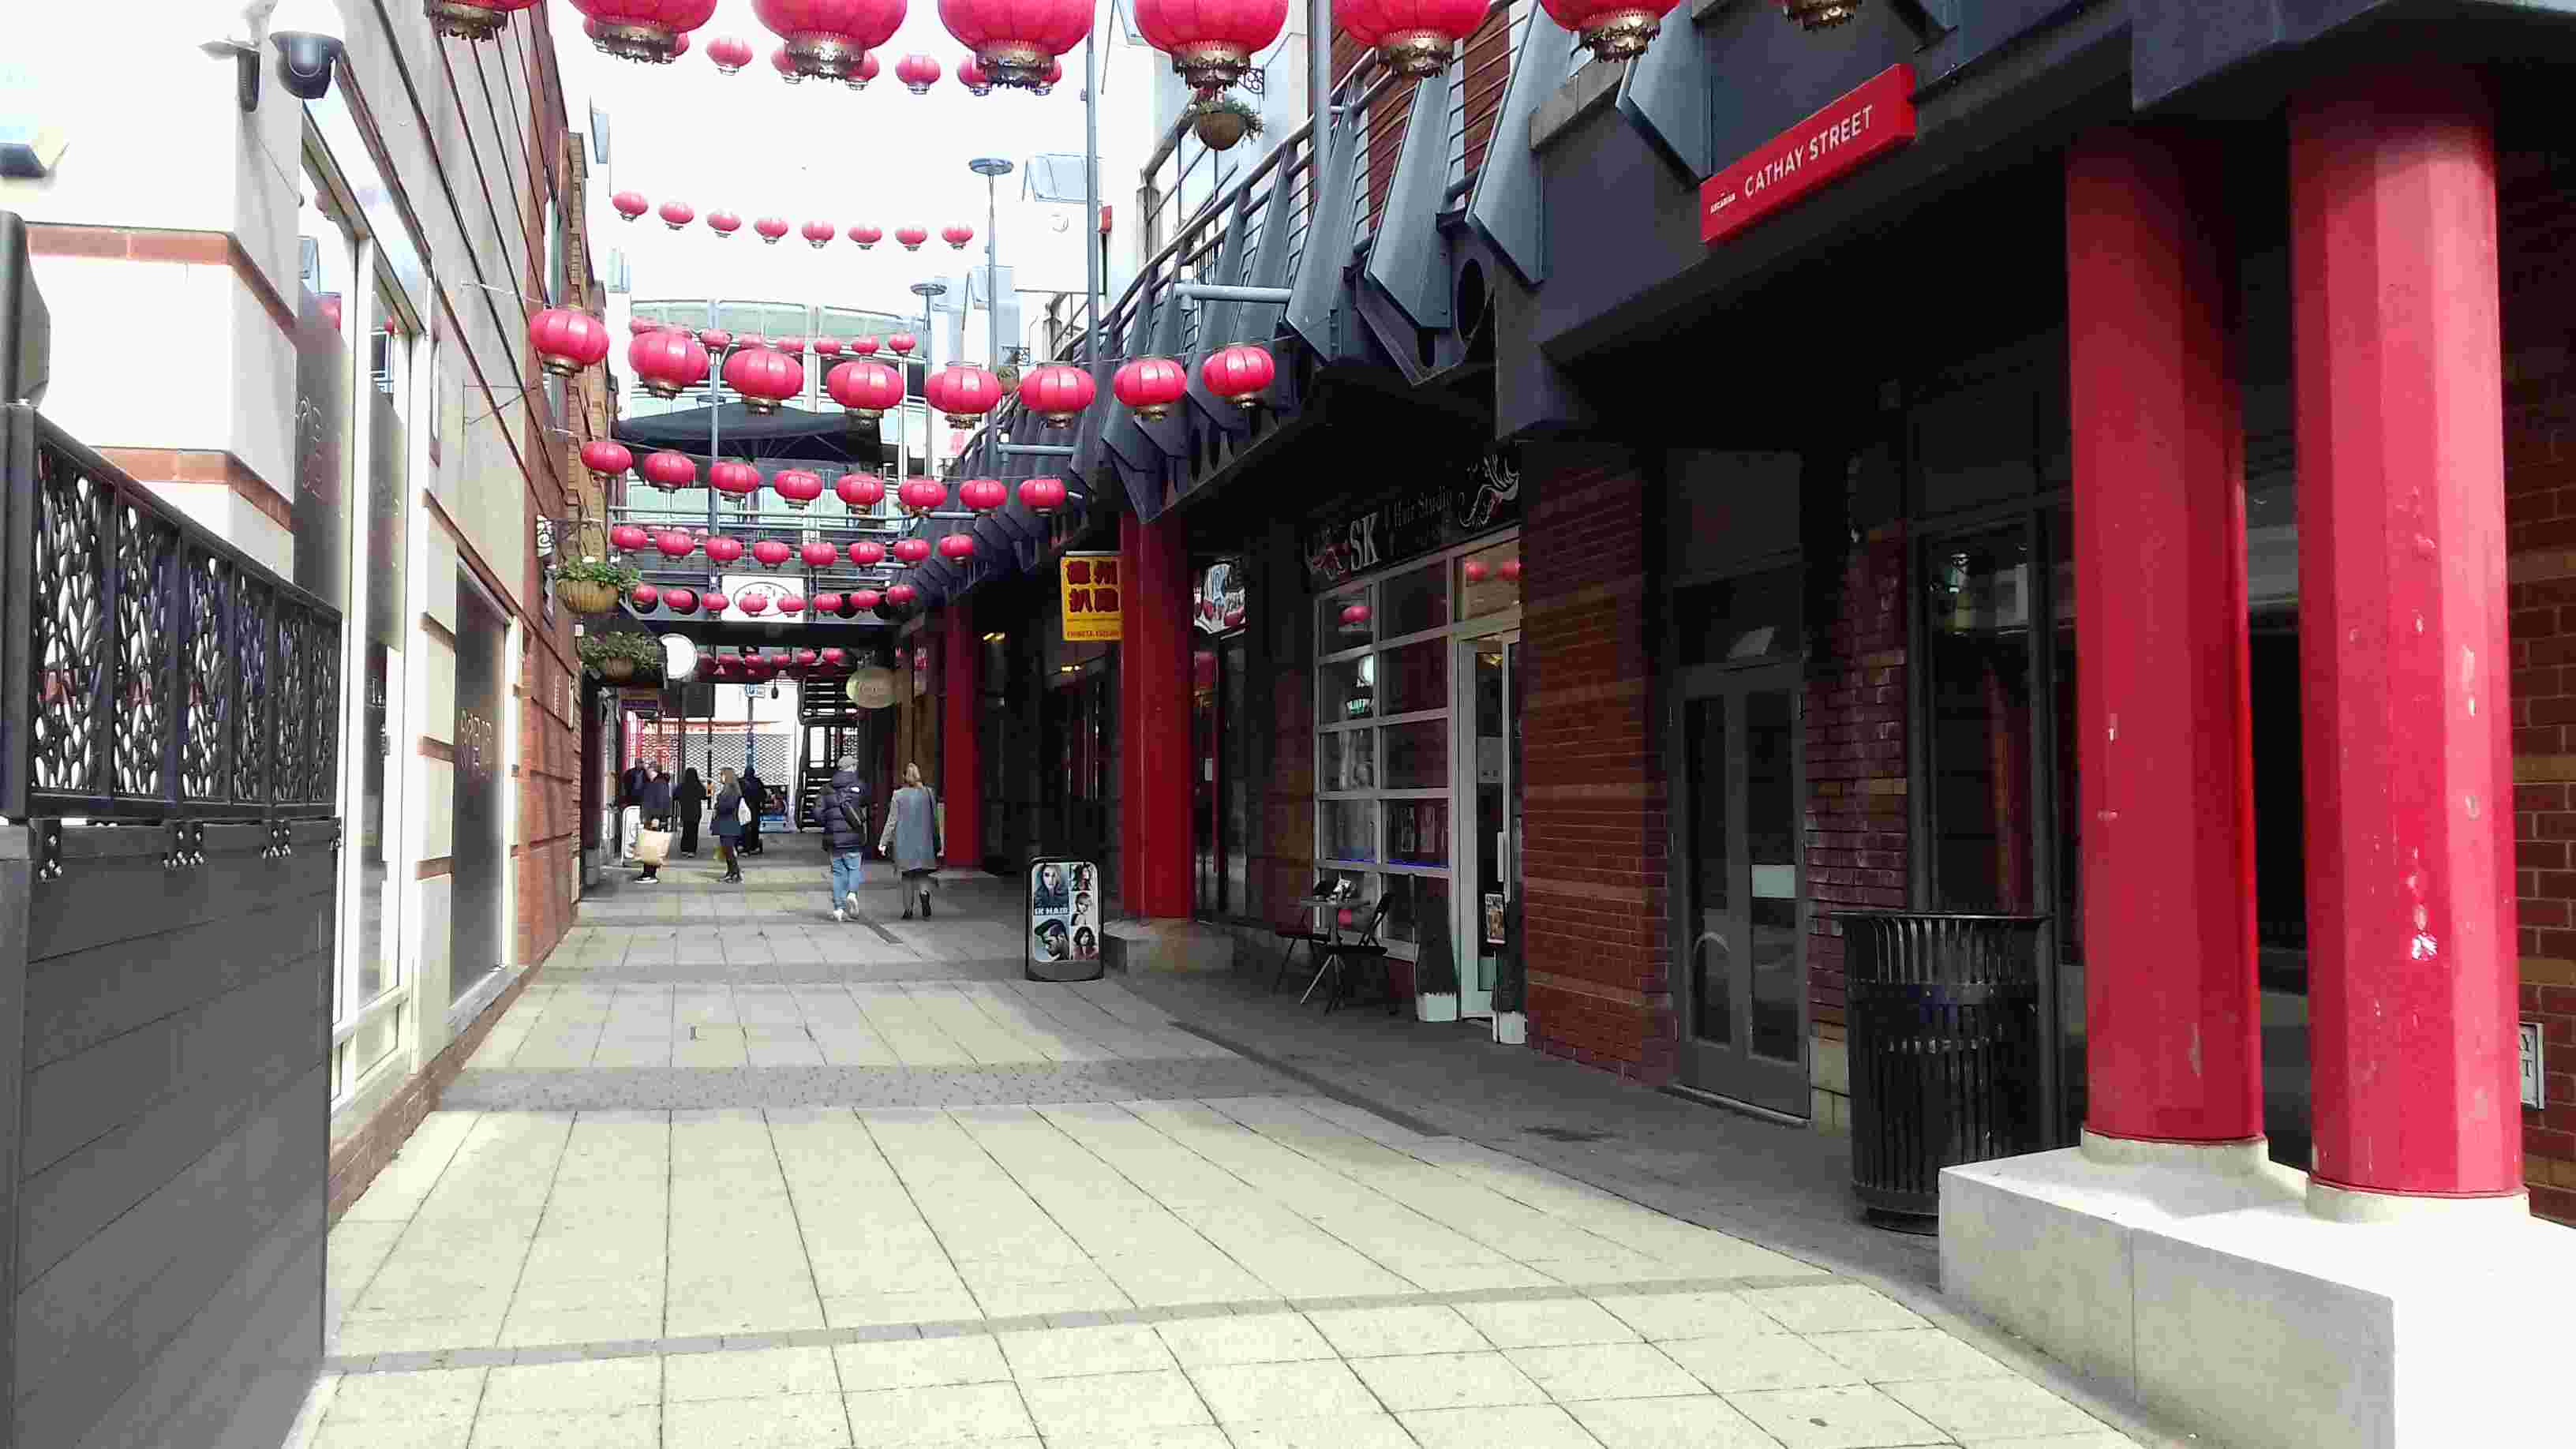 ImagesBirmingham/Birmingham Pubs Gay Chinese Quarter Cathay Street.jpg